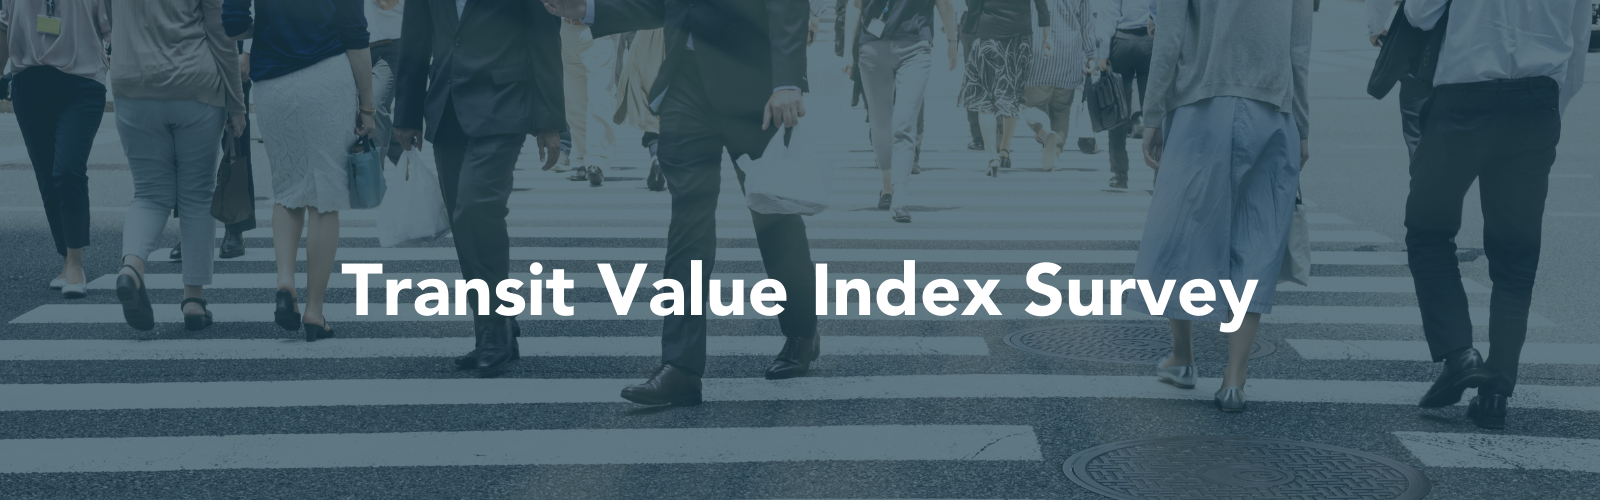 Transit Value Index Survey